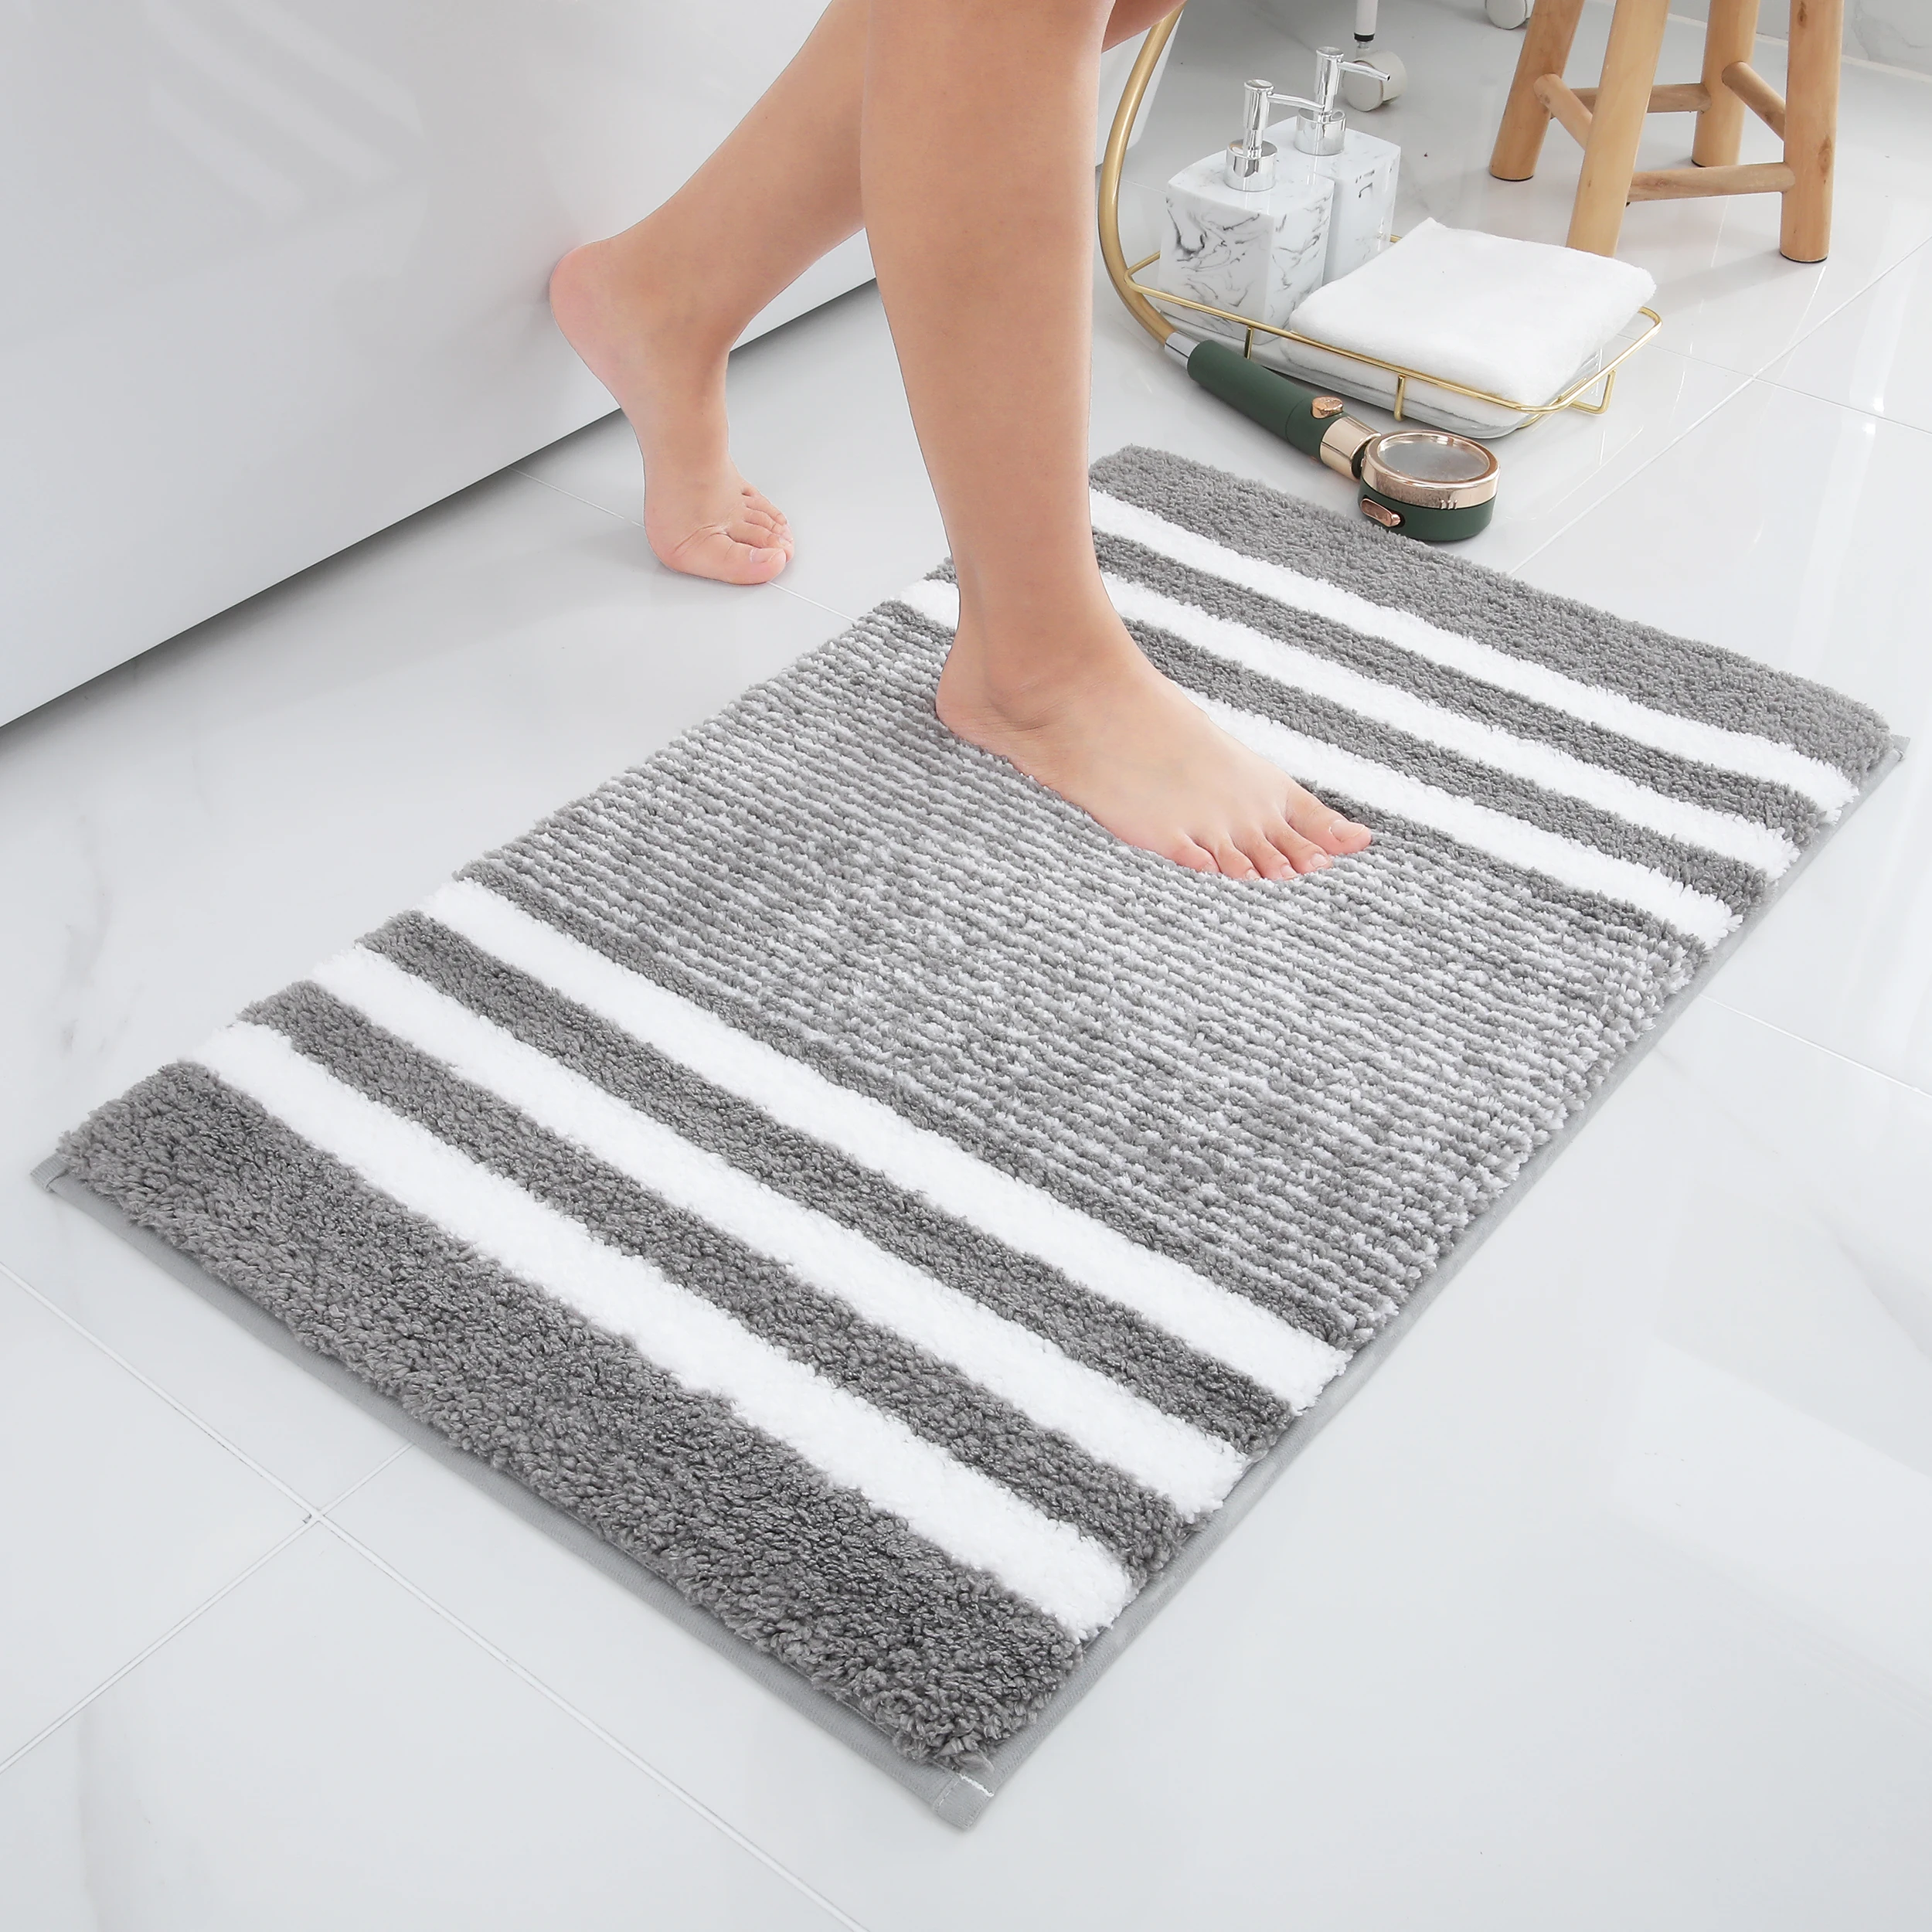 

Olanly Absorbent Bath Mat Quick Dry Anti-Slip Bathroom Show Carpet Soft Kitchen Plush Rug Foot Pad Floor Protector Doormat Decor